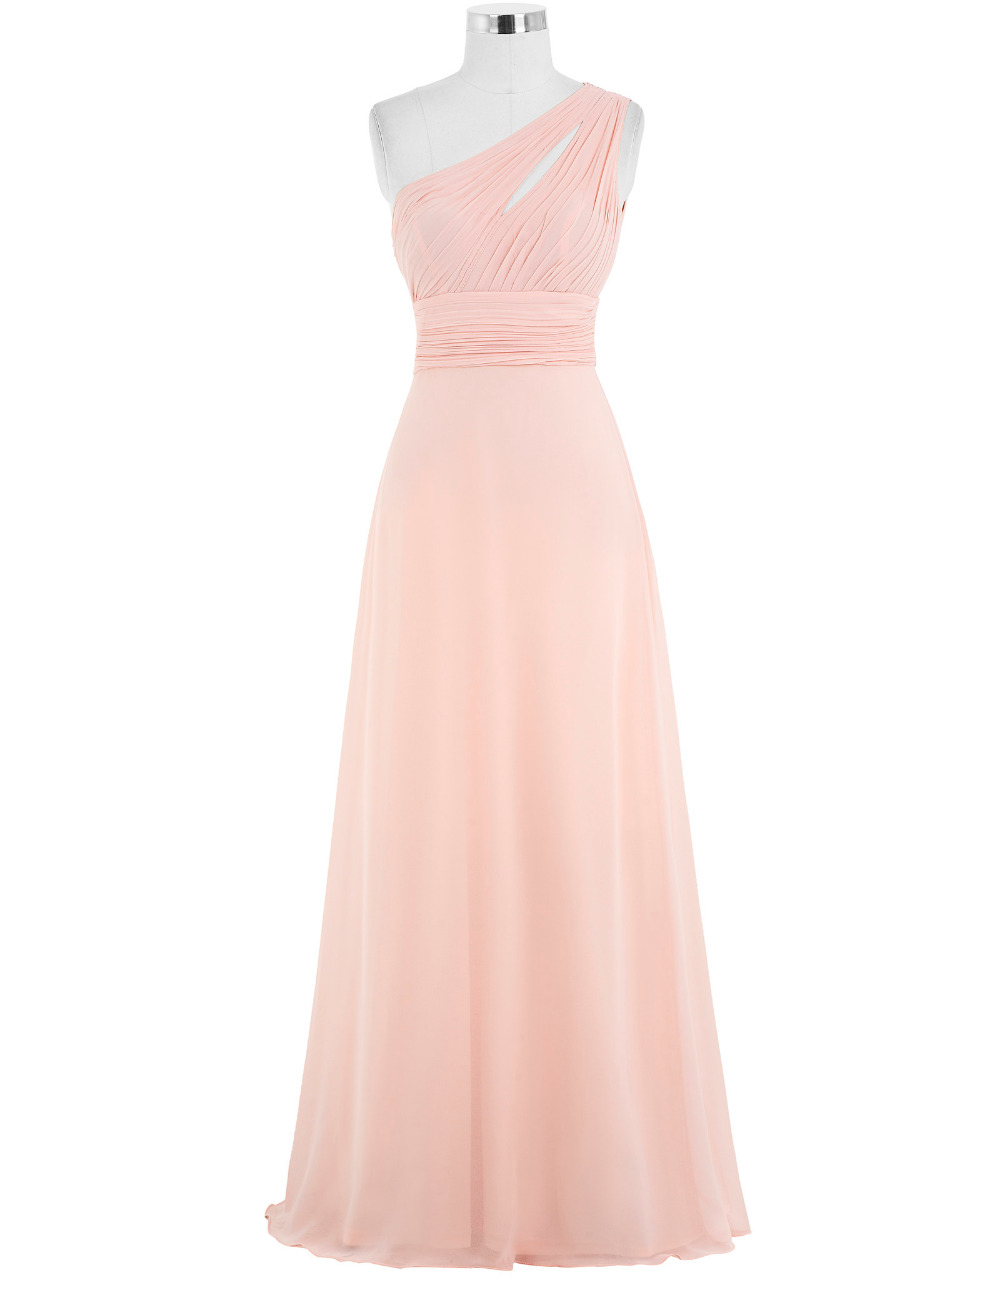 One Shoulder Pink Bridesmaid Dresses,Elegant Long Prom Dresses, Wedding Party dresses, New Arrival Evening Gowns